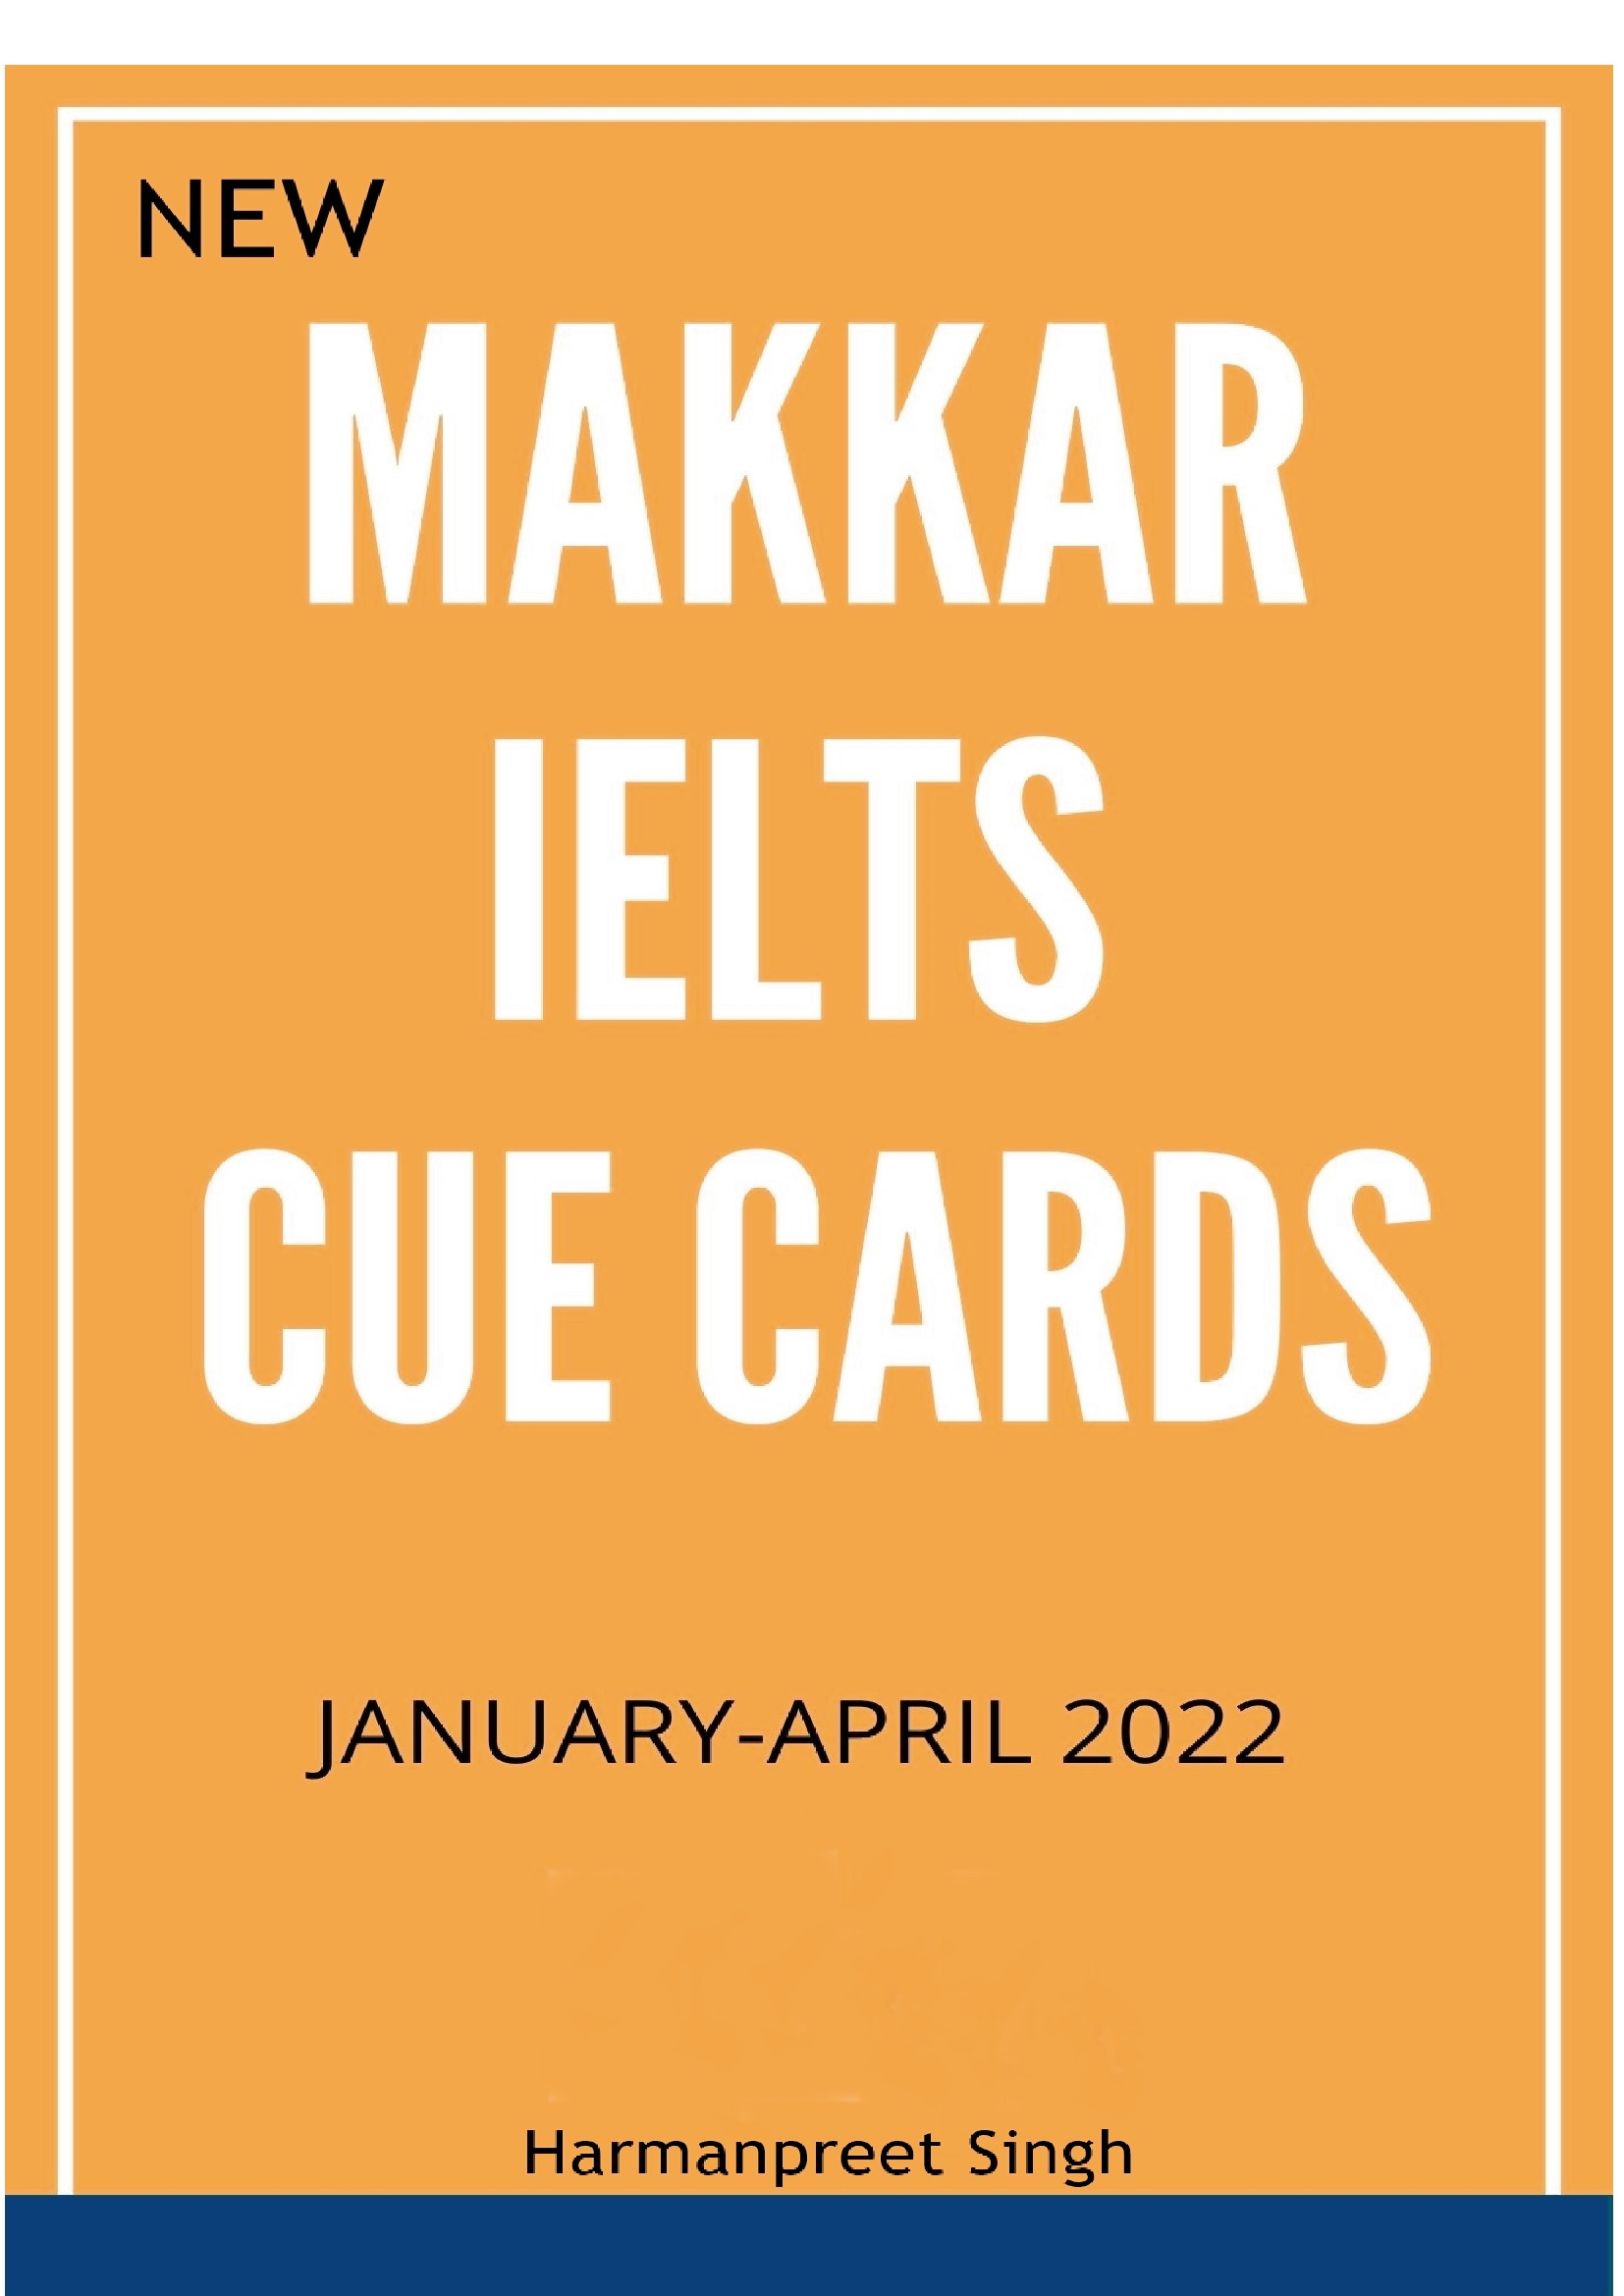 New Makkar IELTS Cue Cards for January to April 2022 | Pothi.com